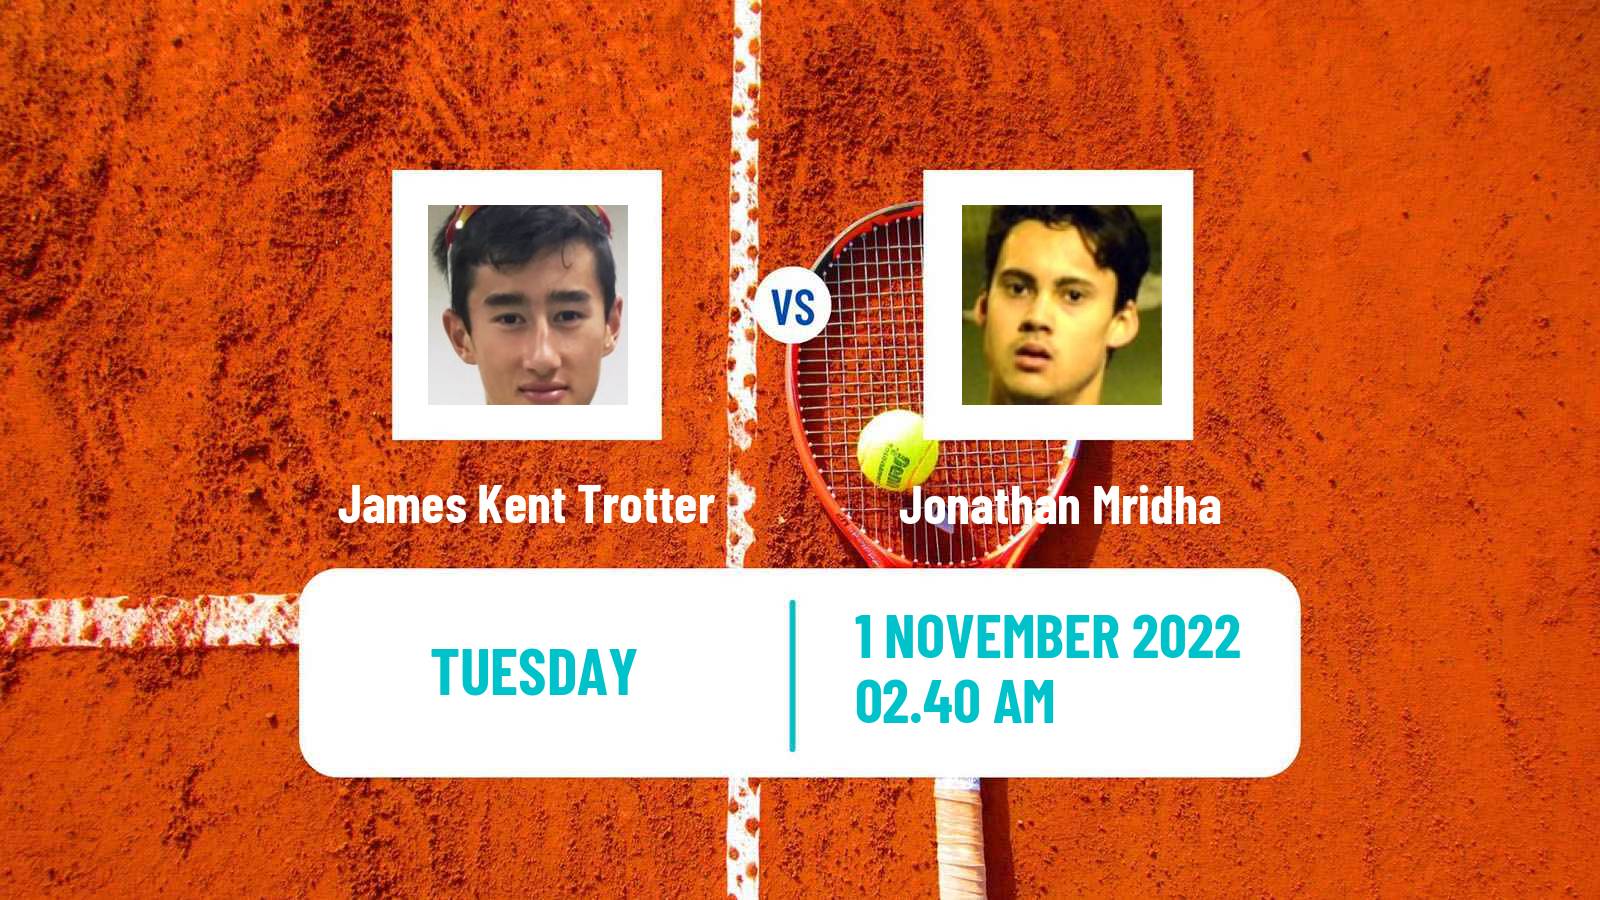 Tennis ATP Challenger James Kent Trotter - Jonathan Mridha